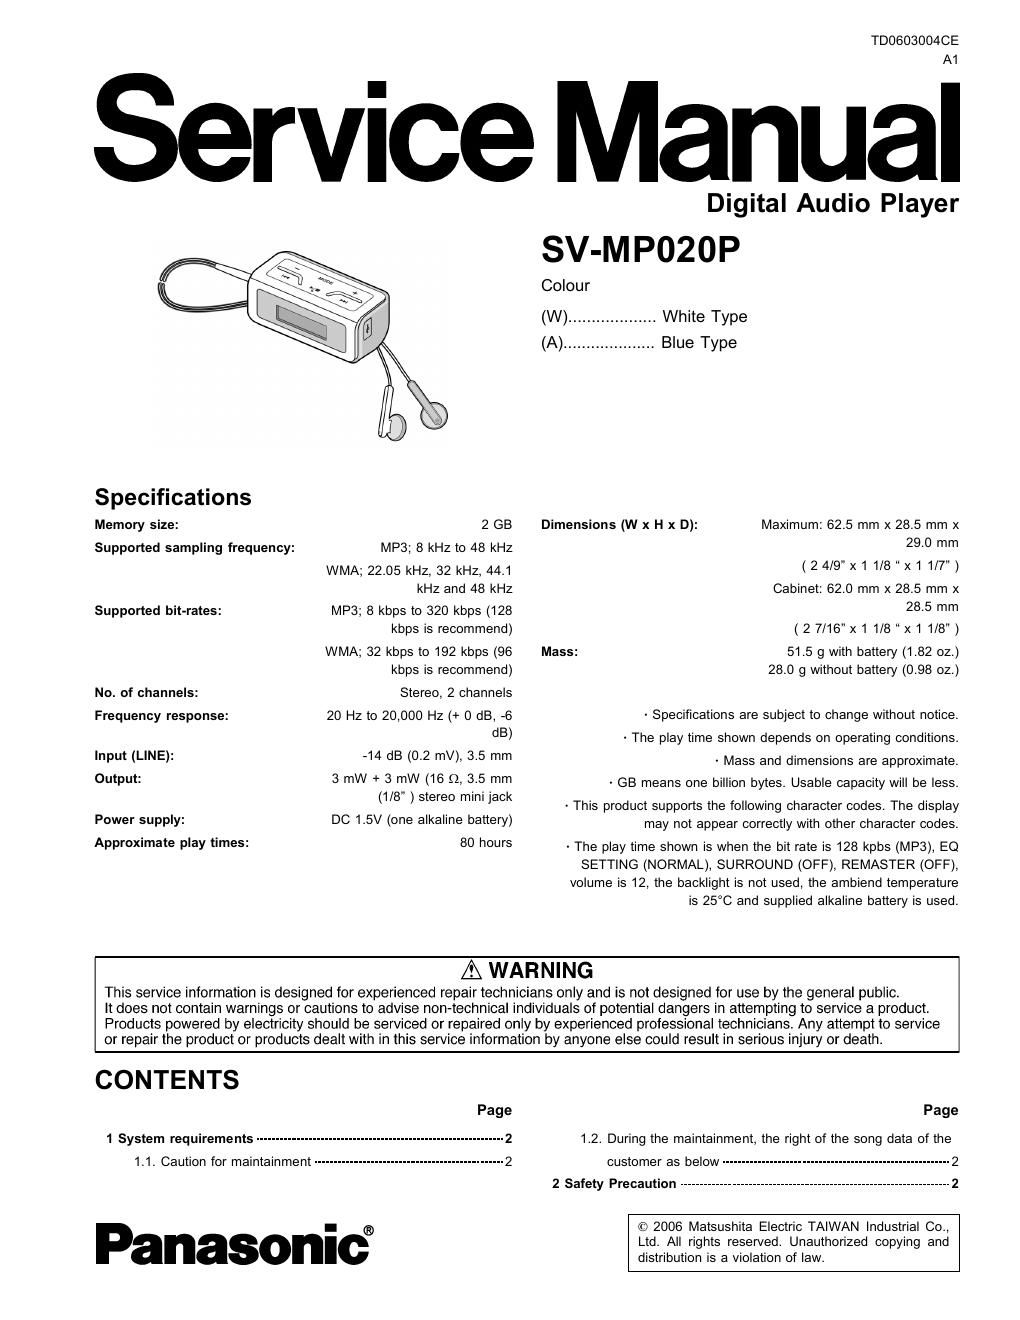 panasonic sv mp 020 p service manual